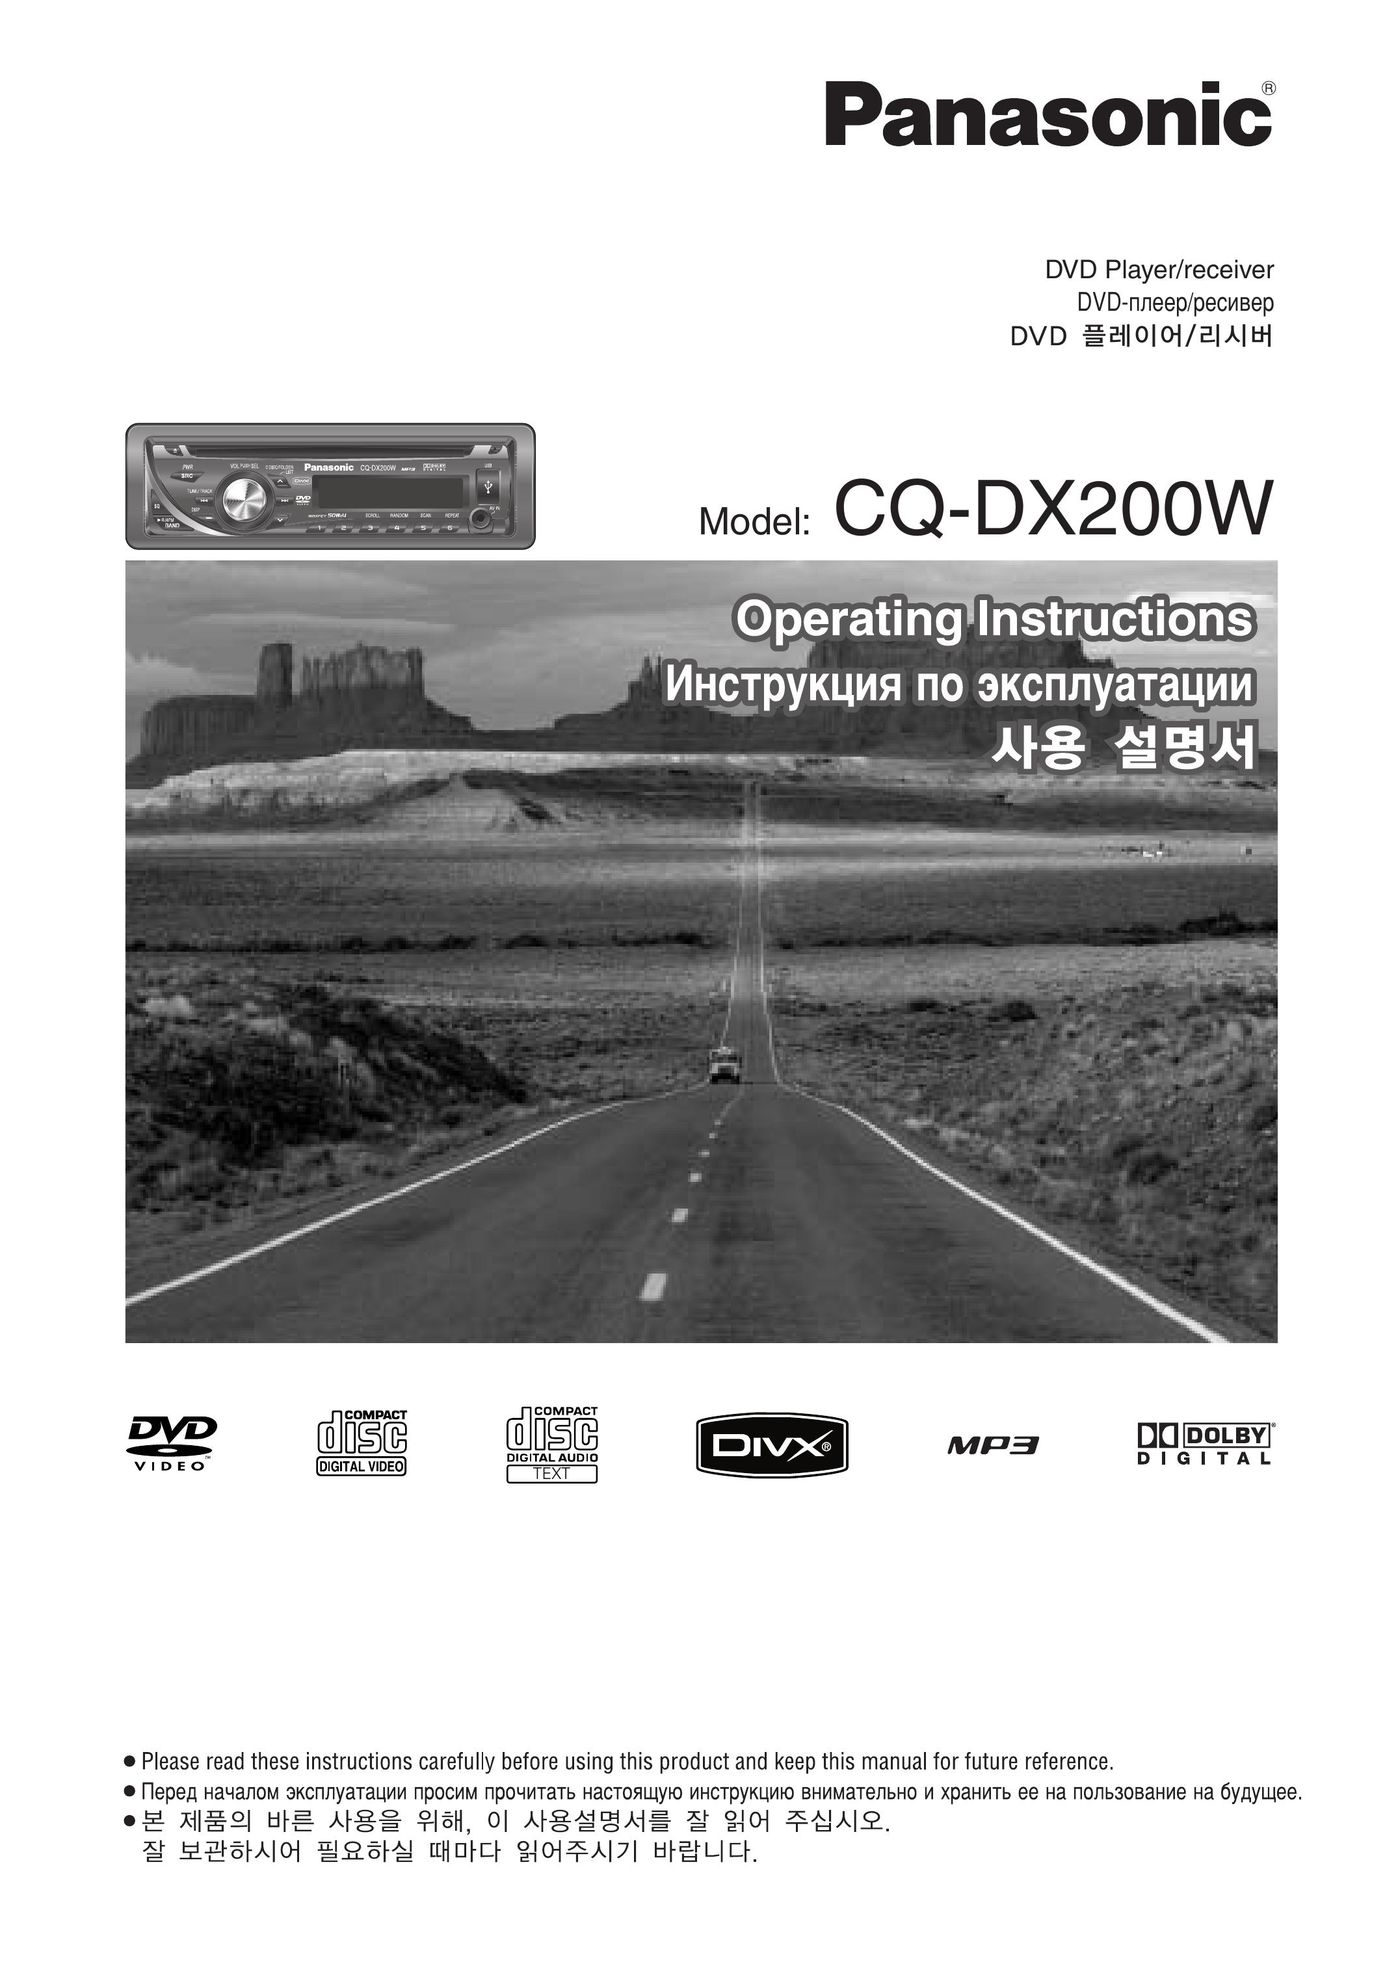 Panasonic CQ-DX200W DVD Player User Manual